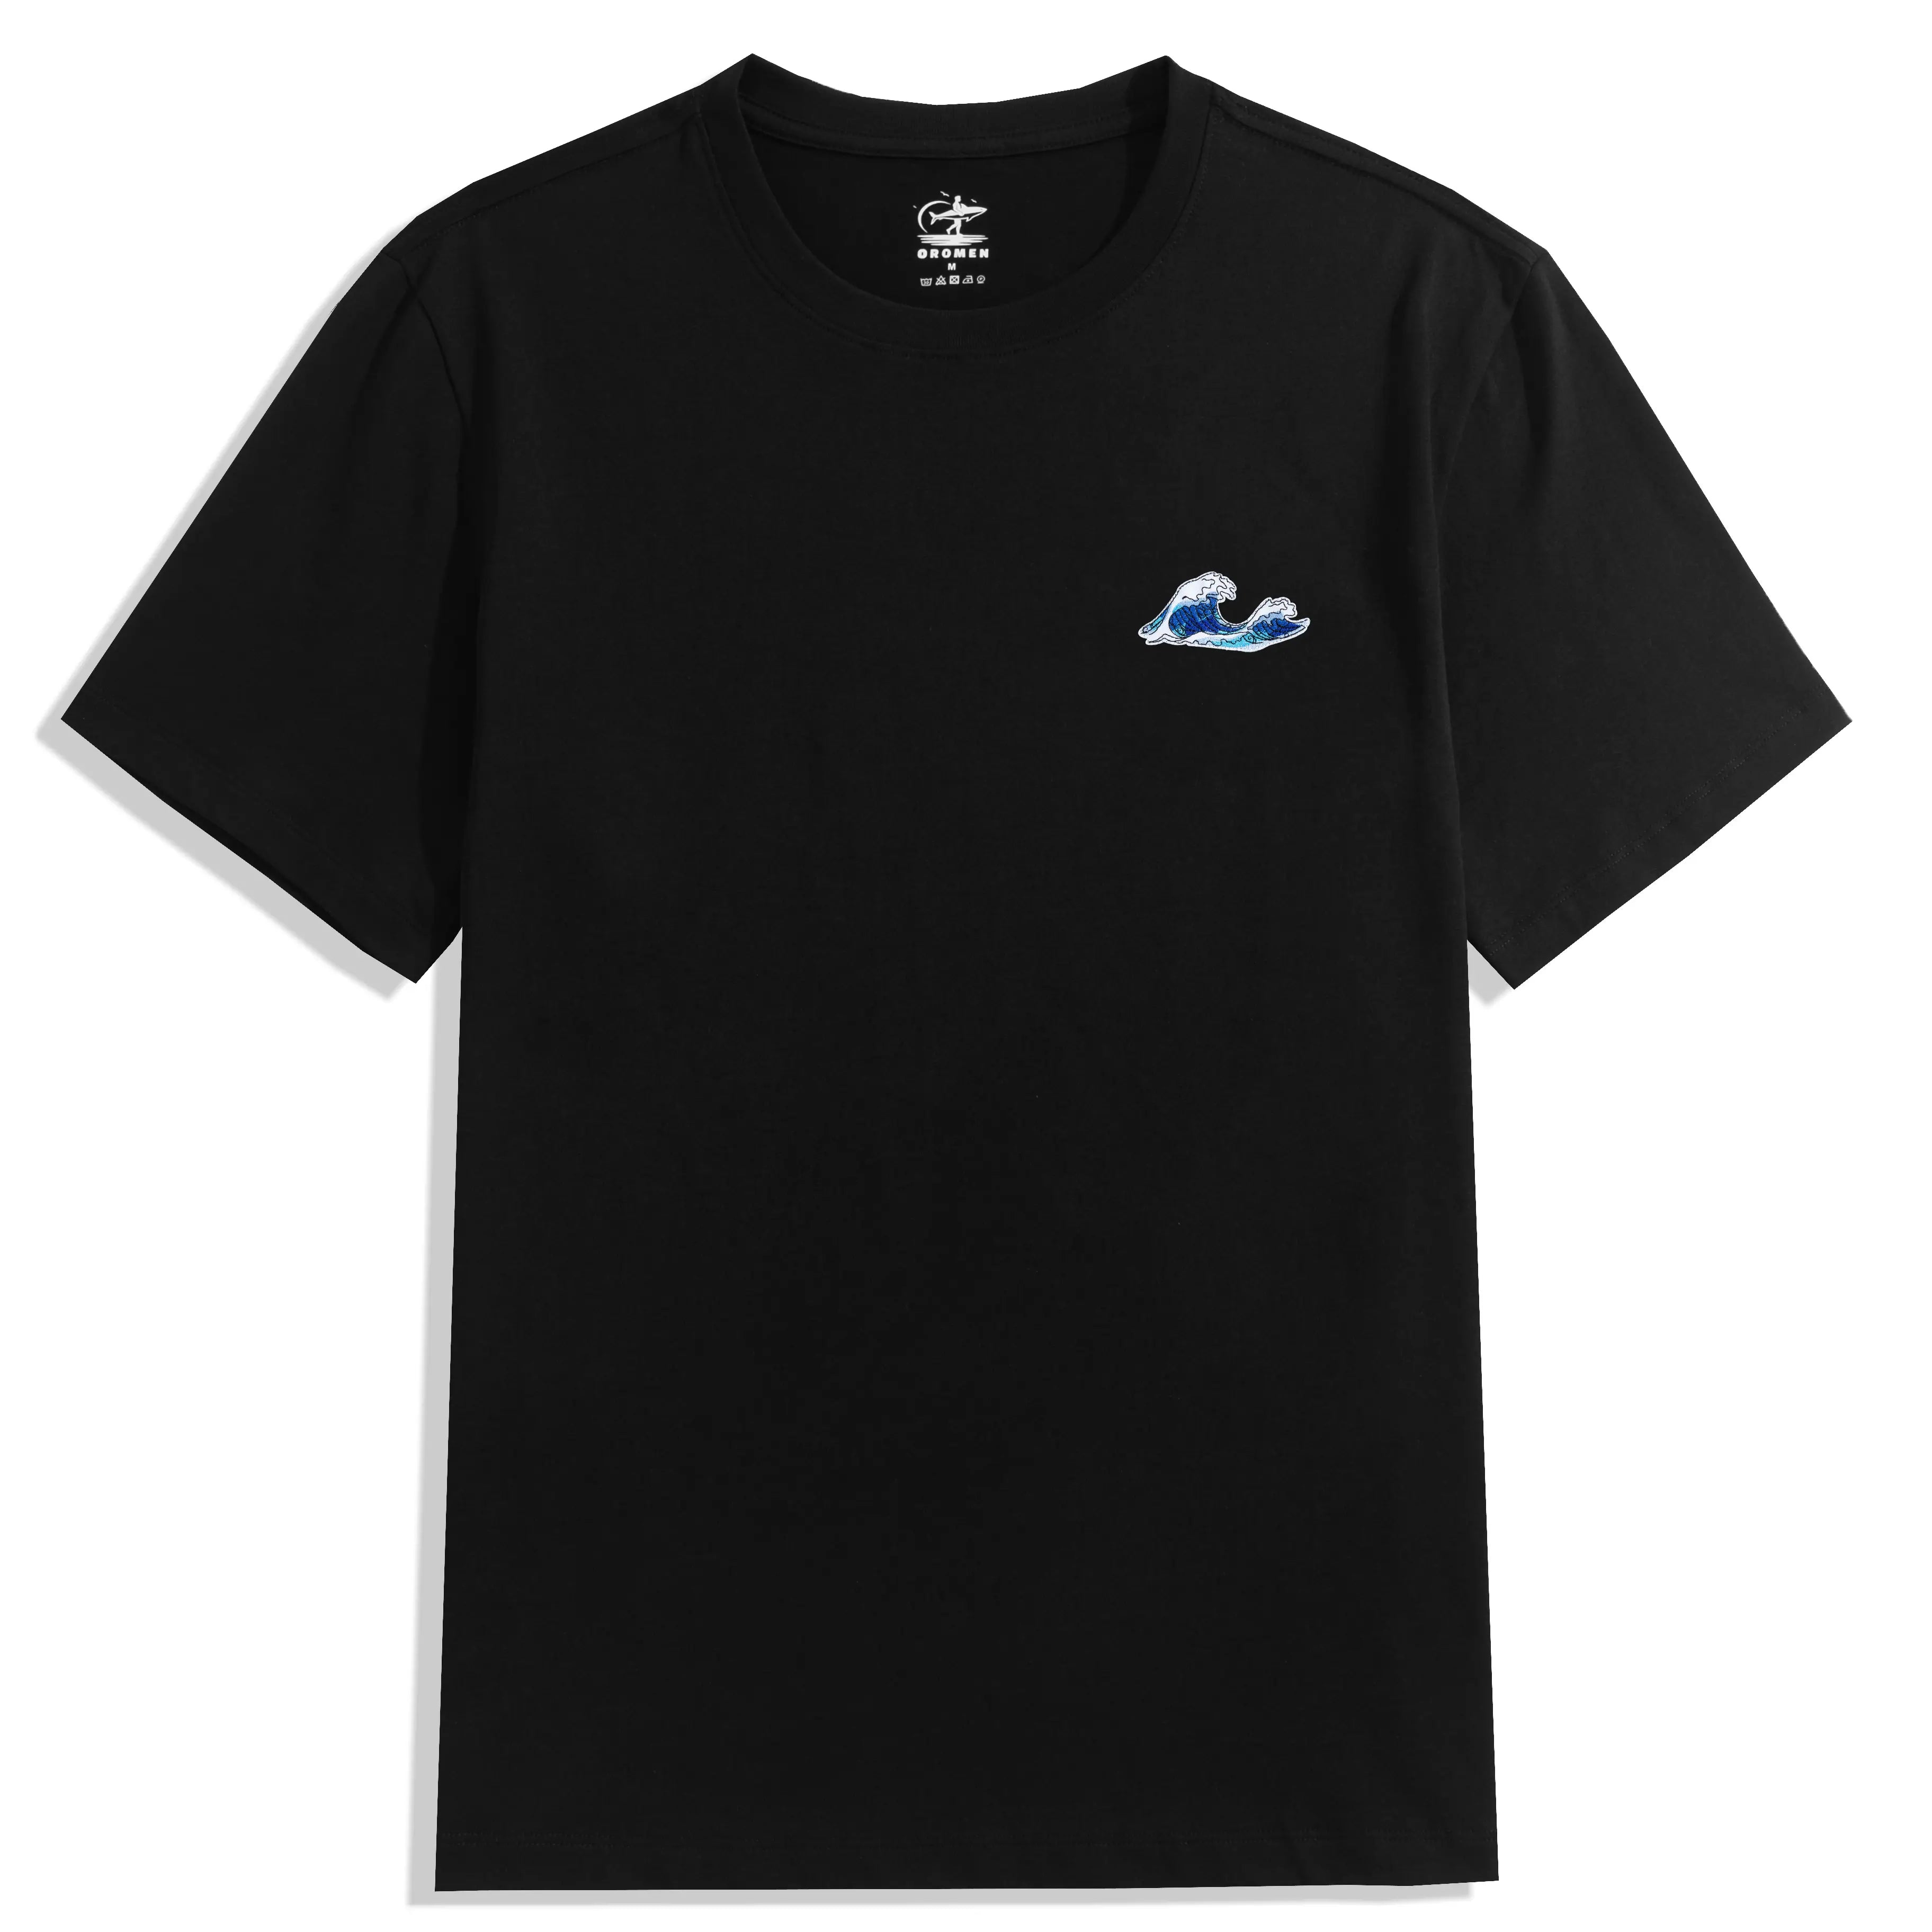 The Great Wave Off Kanagawa T-shirt Black Color